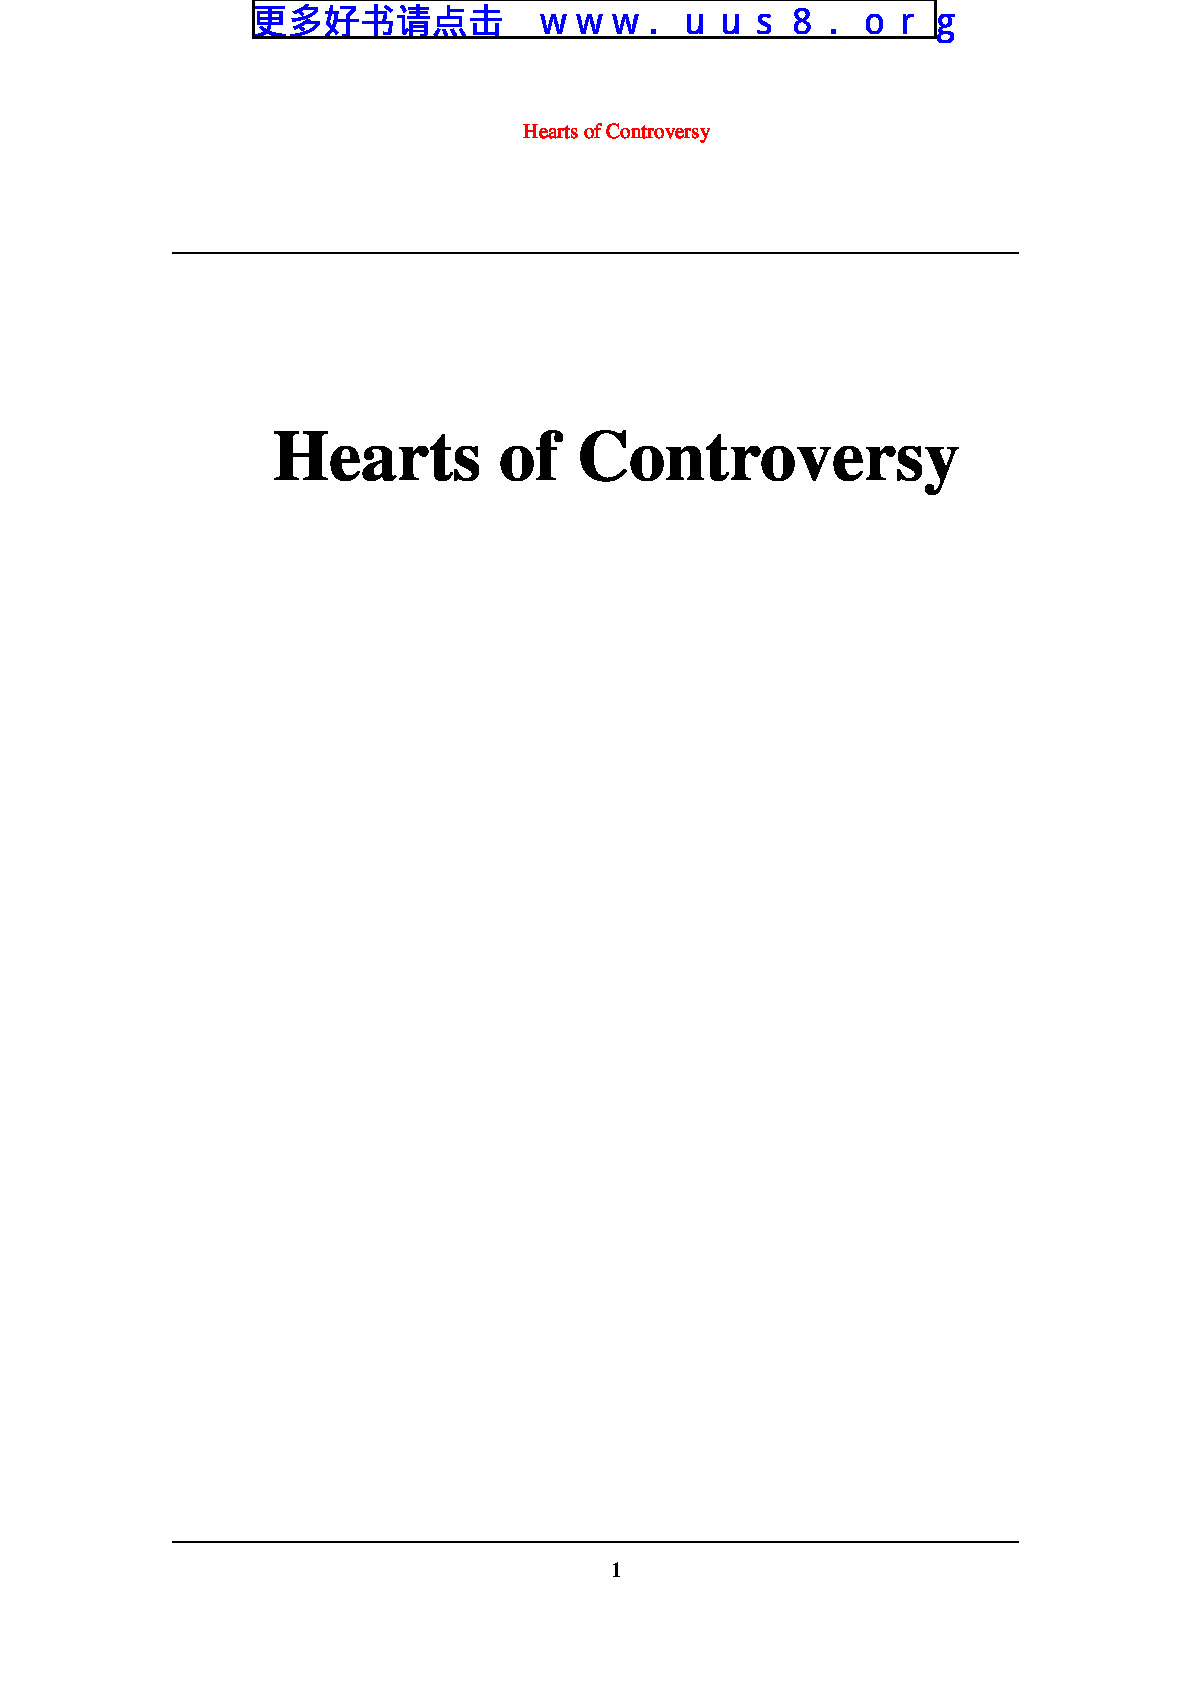 Hearts_of_Controversy(争论的中心)